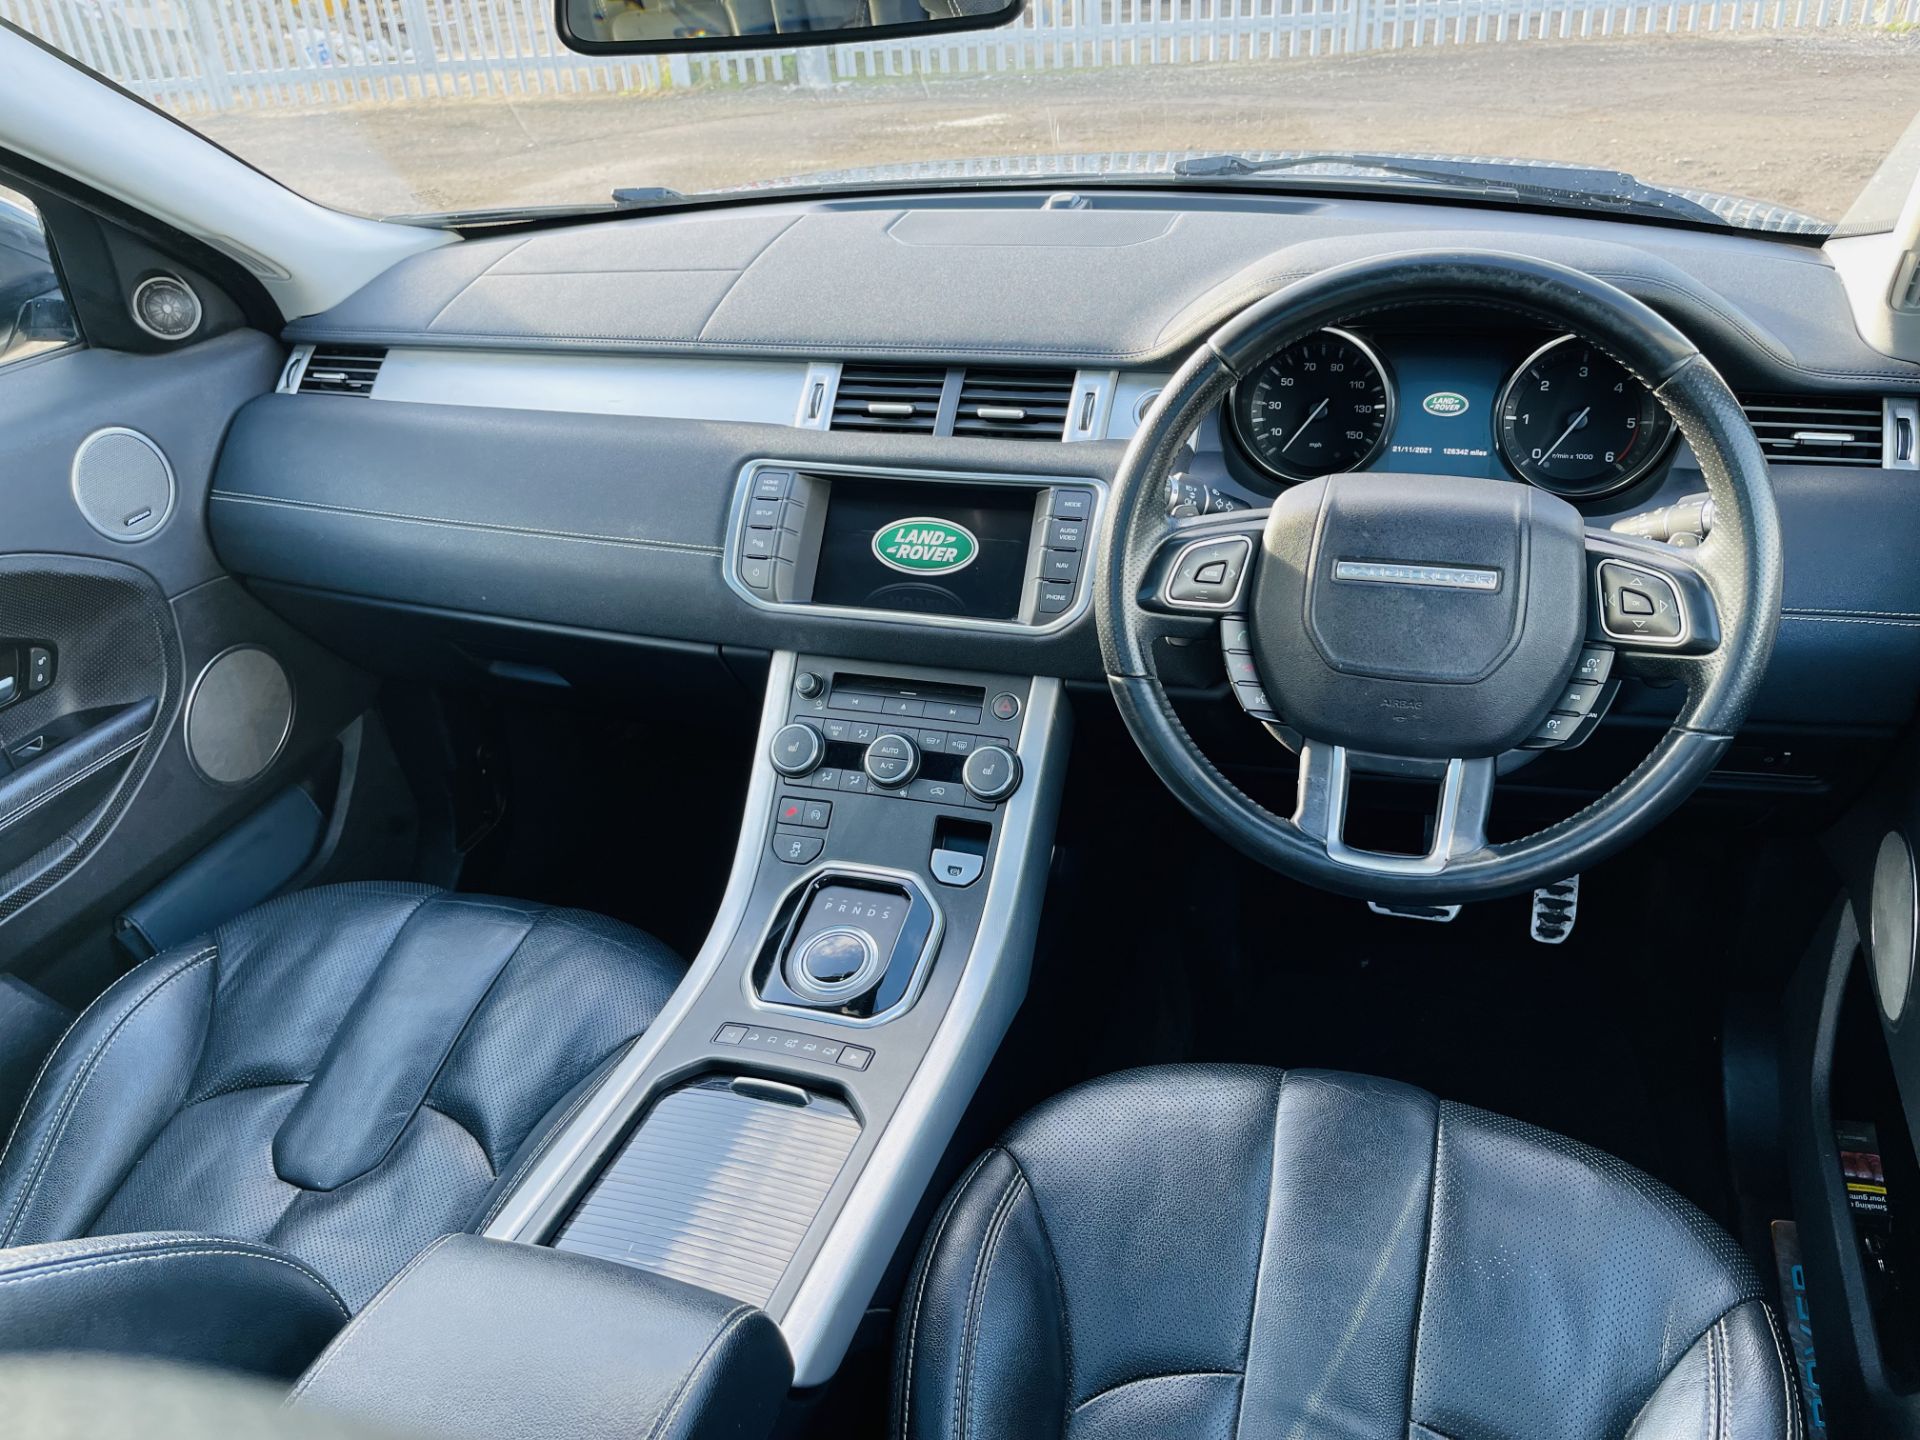 Range Rover Evoque Dynamic 2.2 SD4 4WD Commandshift 2015 '15 Reg' Sat Nav - Panoramic Roof - Image 25 of 38